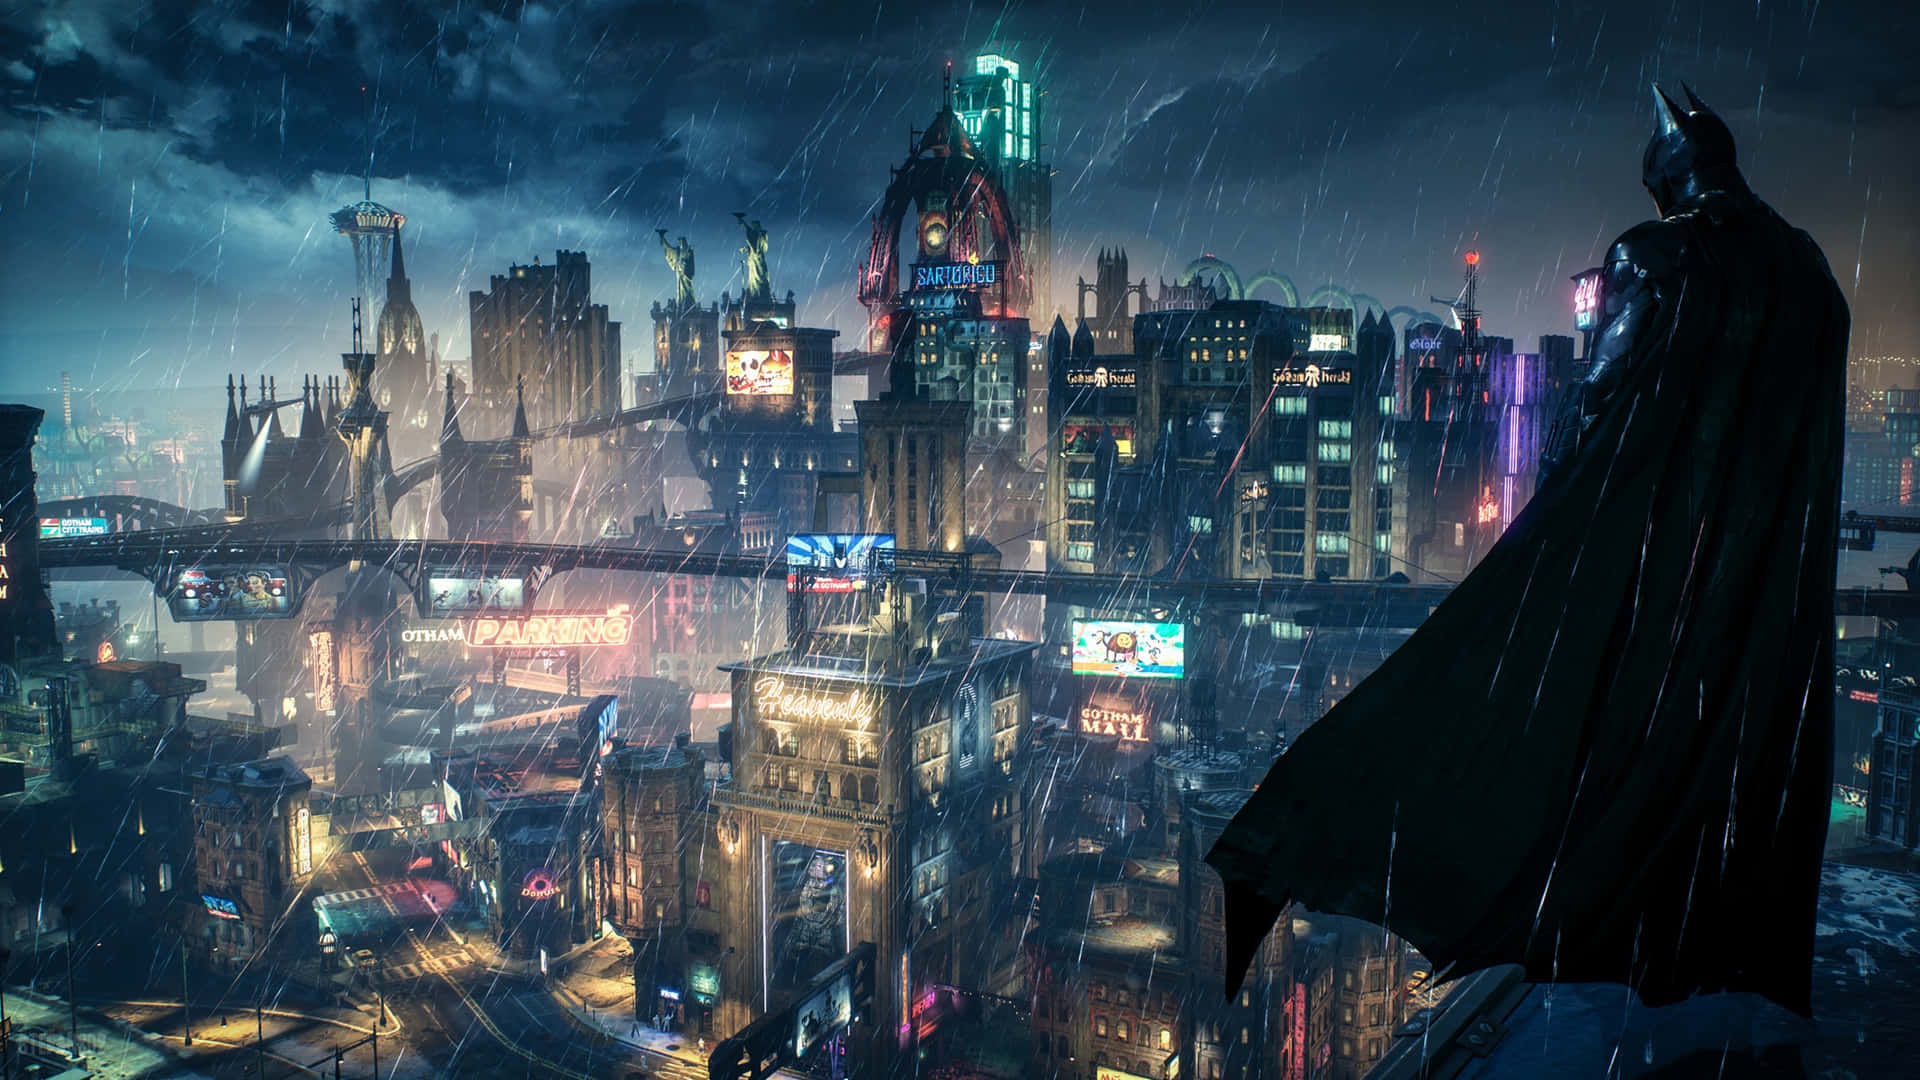 100+] Batman Arkham City 4k Wallpapers